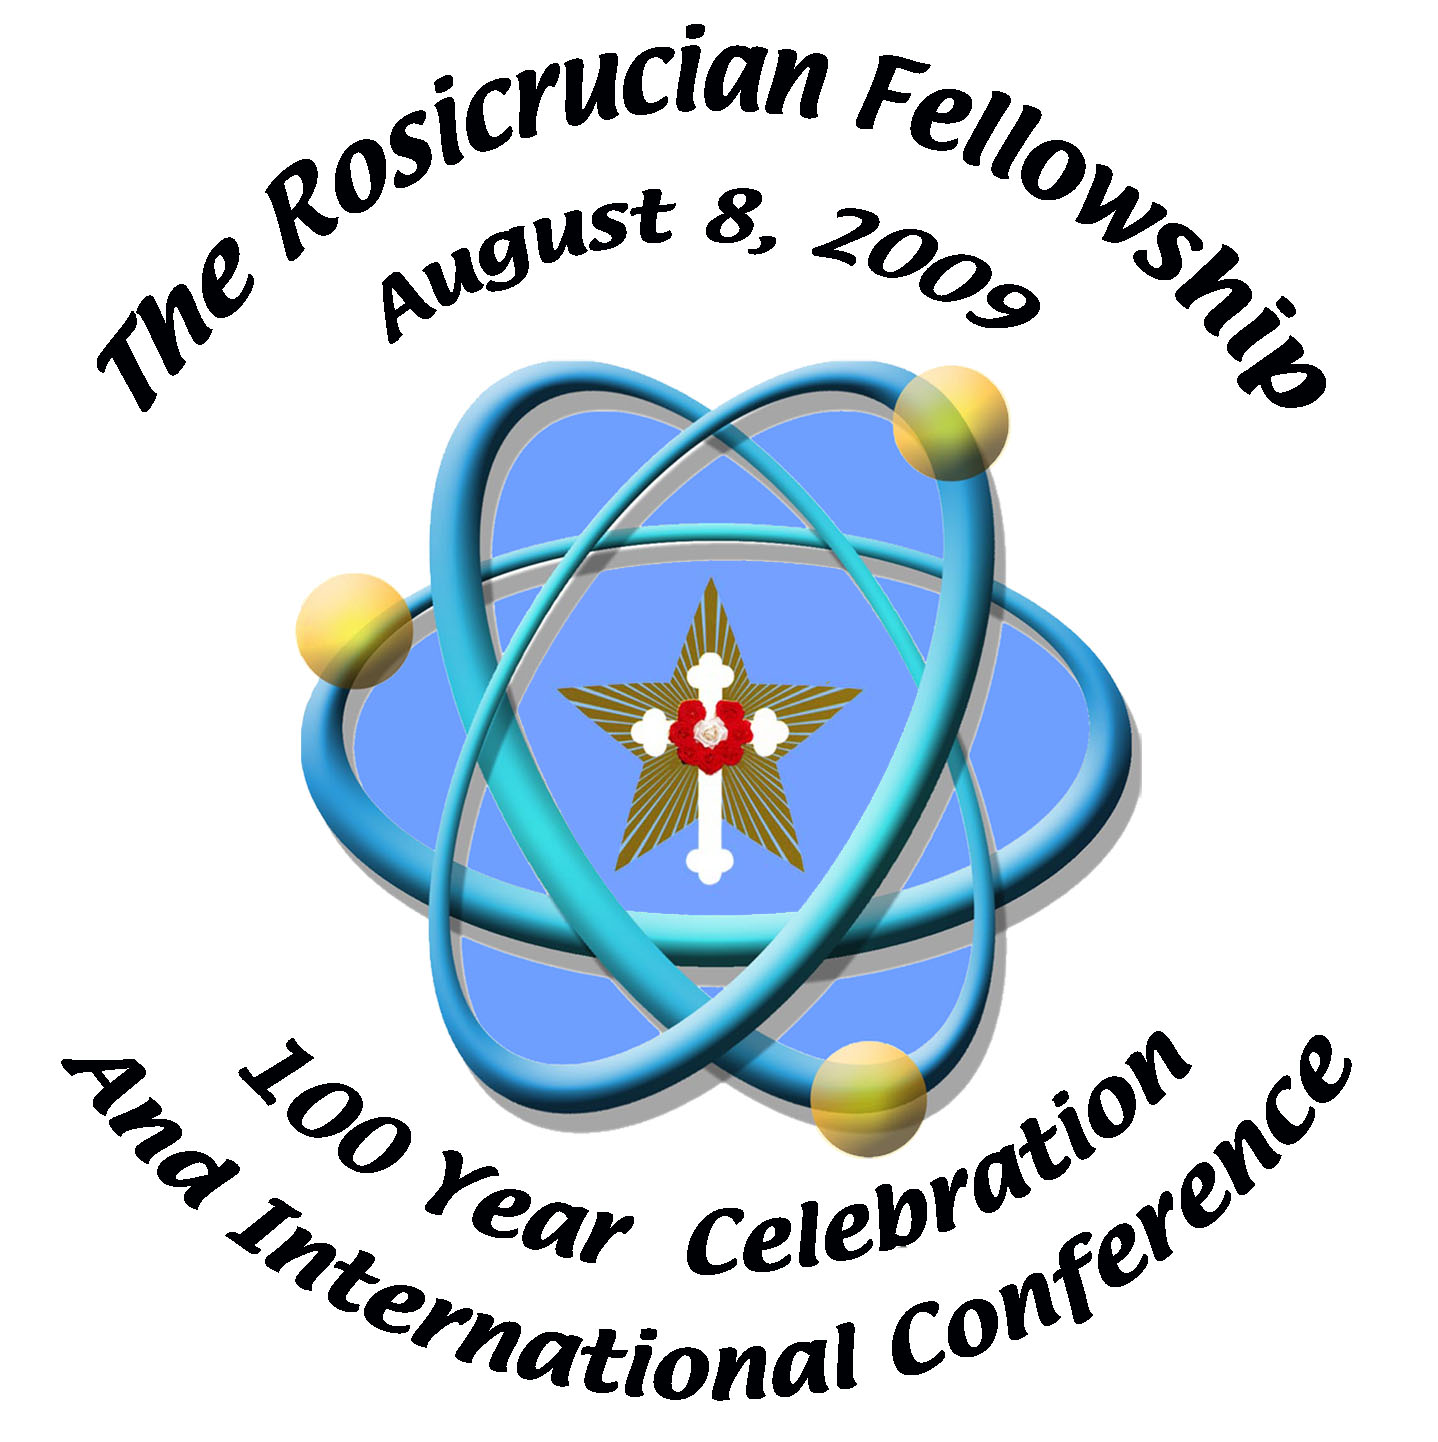 The Rosicrucian Fellowship - 100 Year Celebration